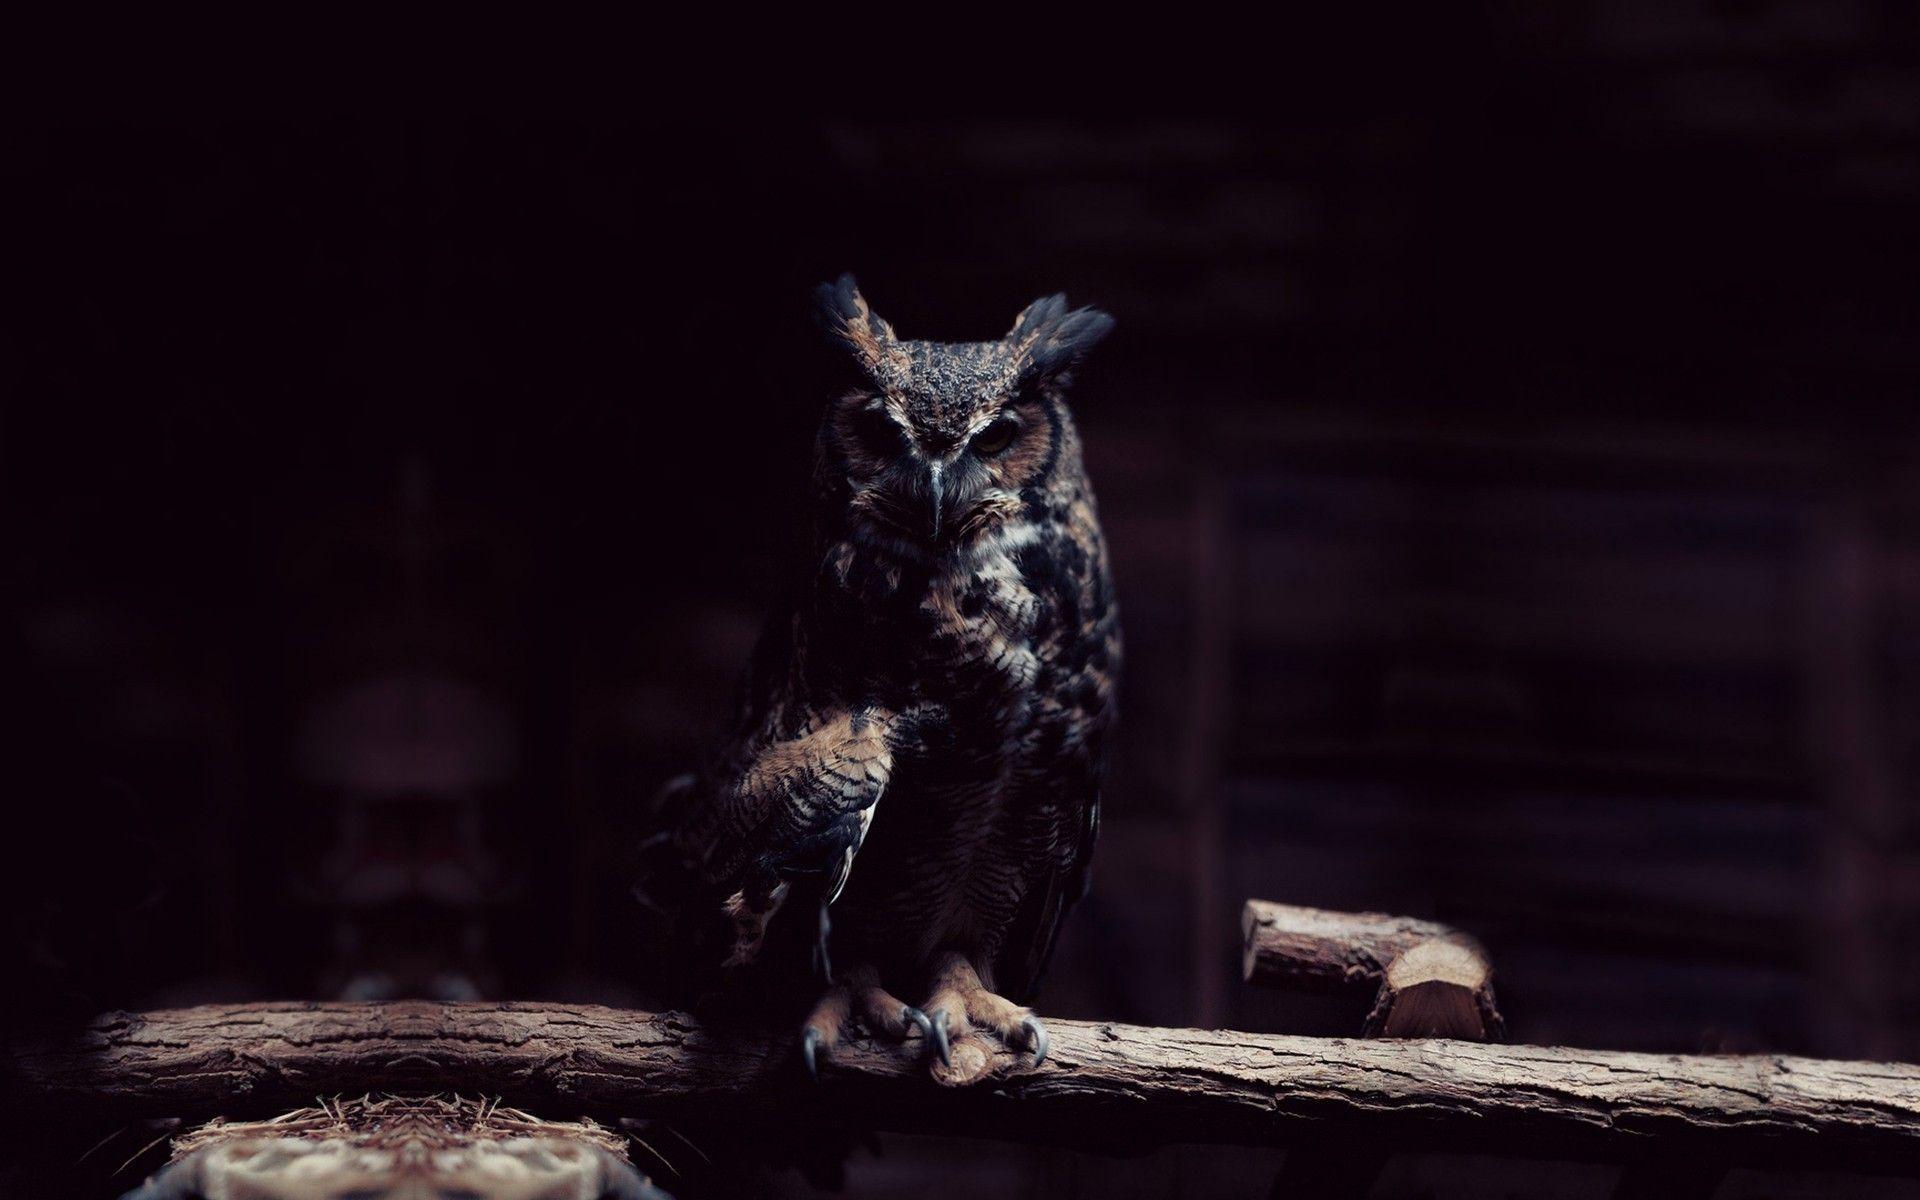 night owl 4k ultra hd hybrid